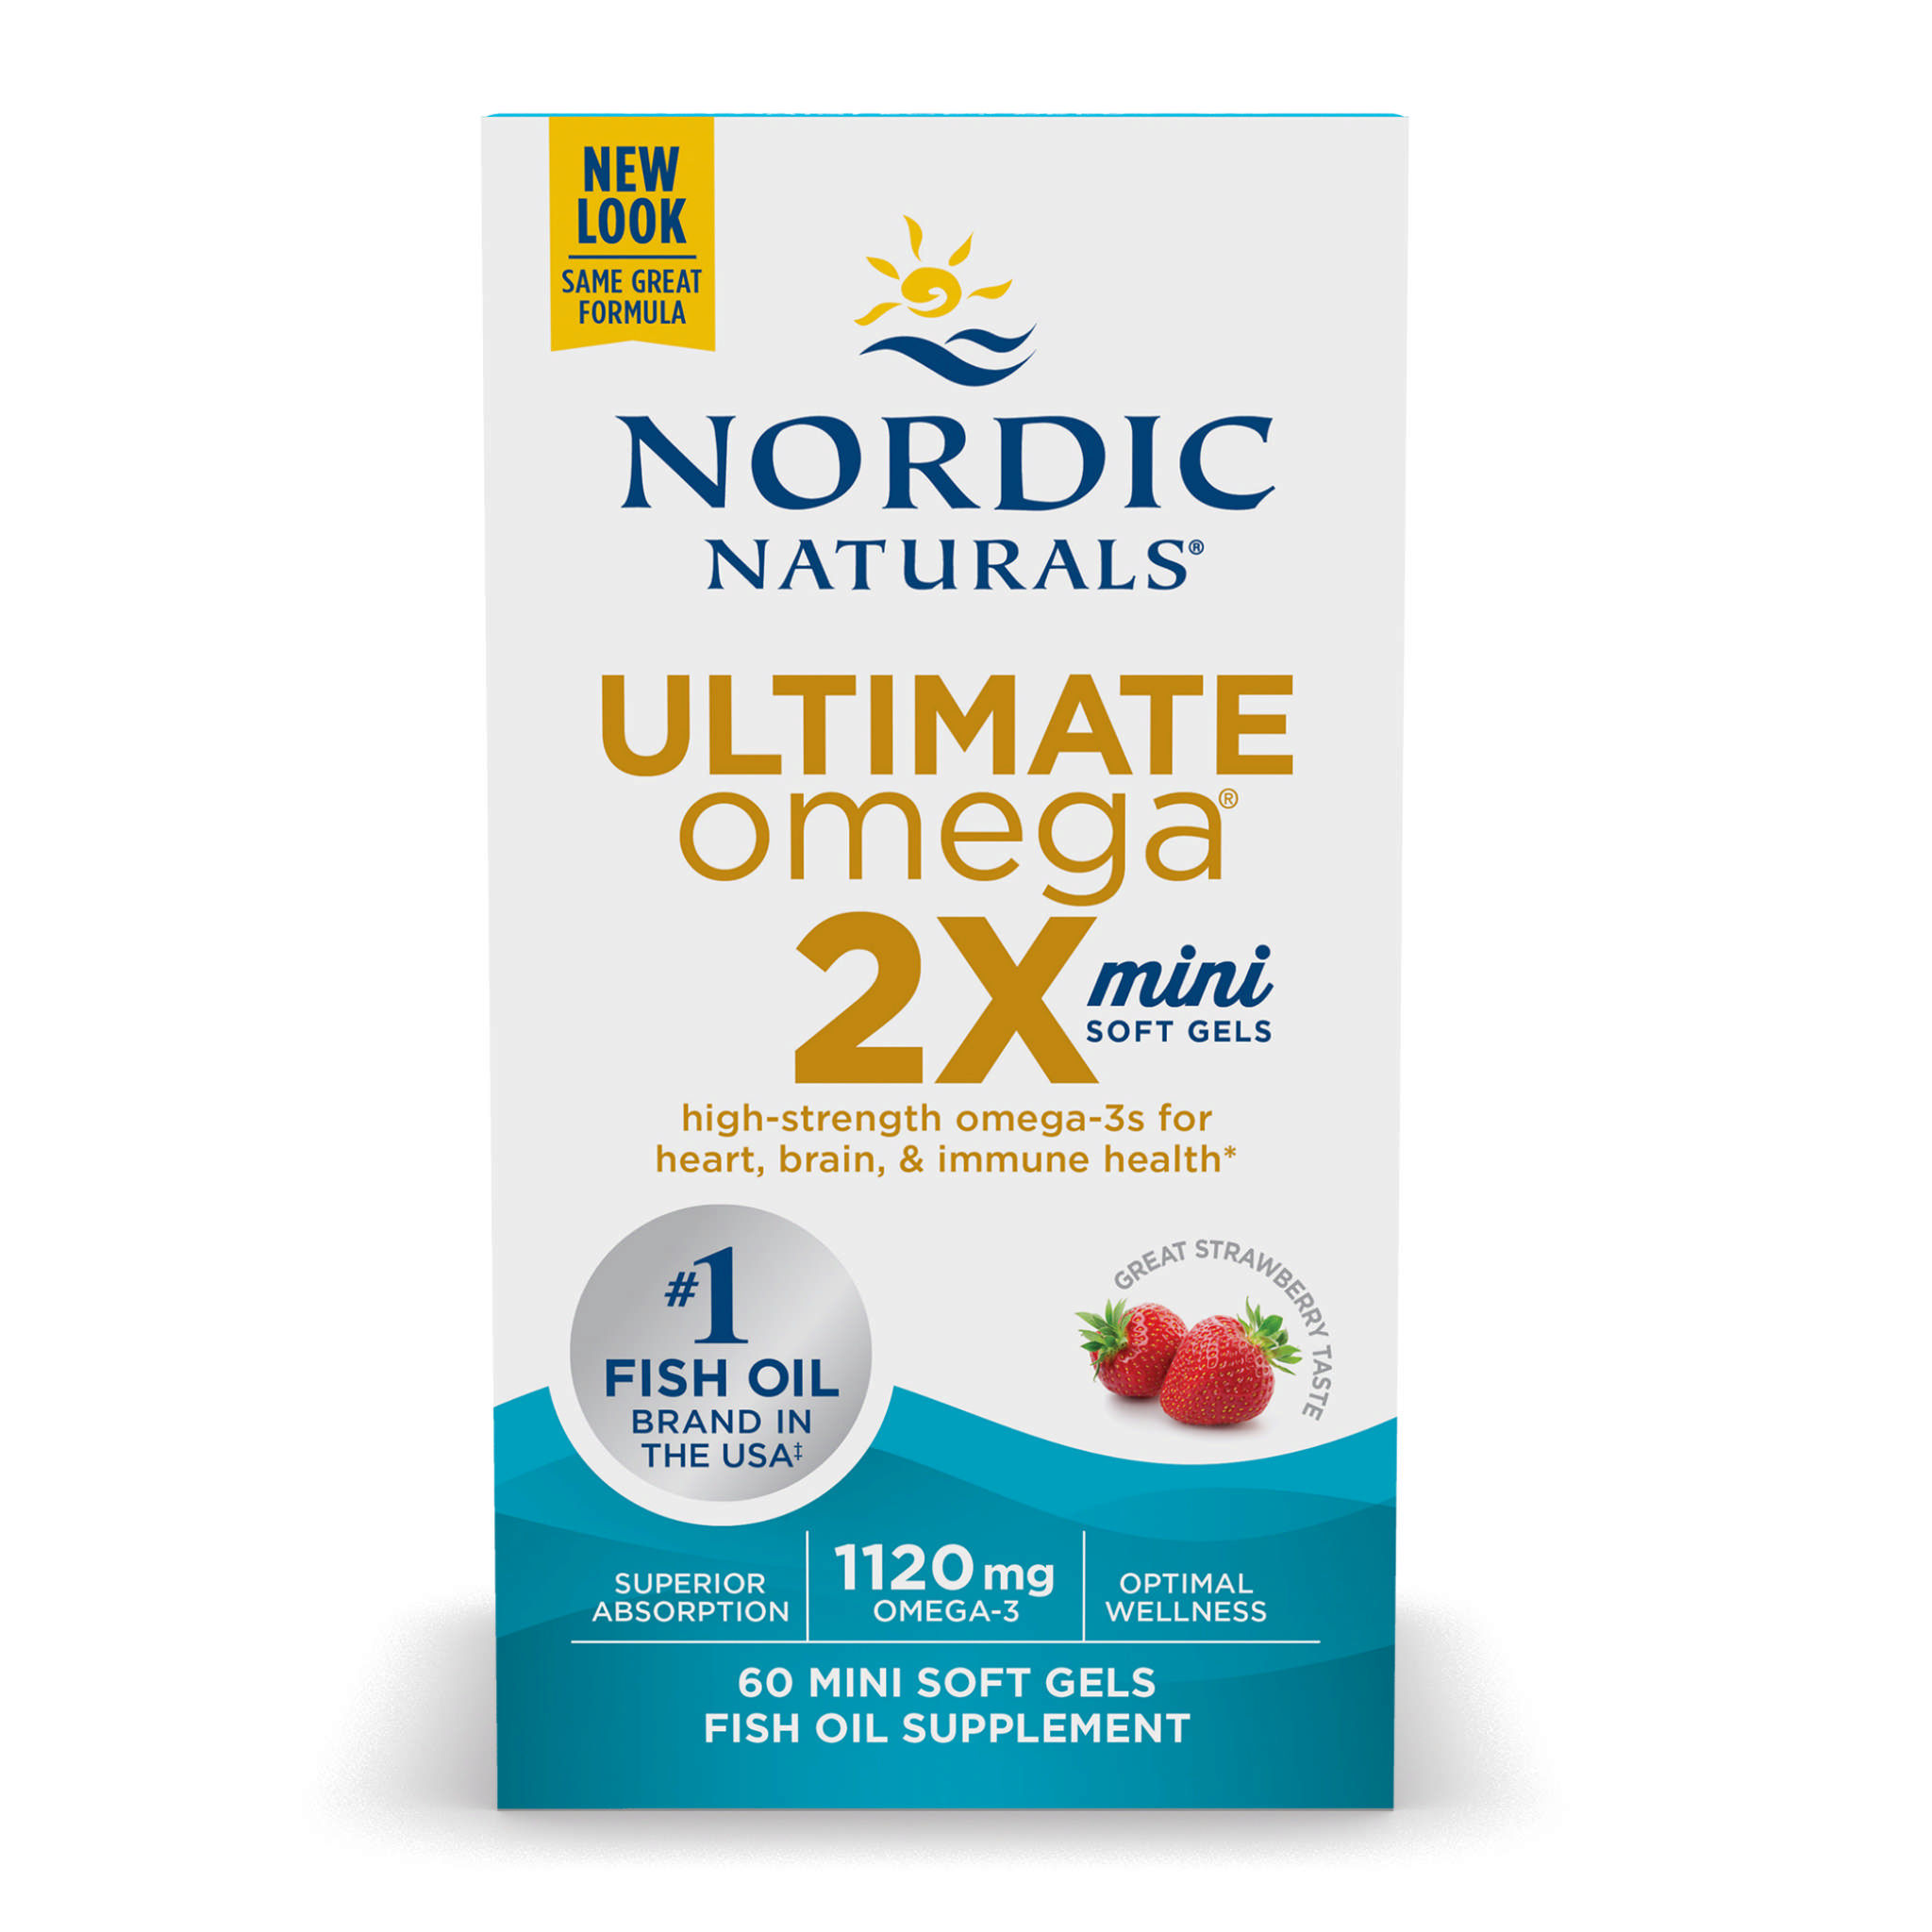 Nordic Naturals - Omega Ultimate 2x Minis 500